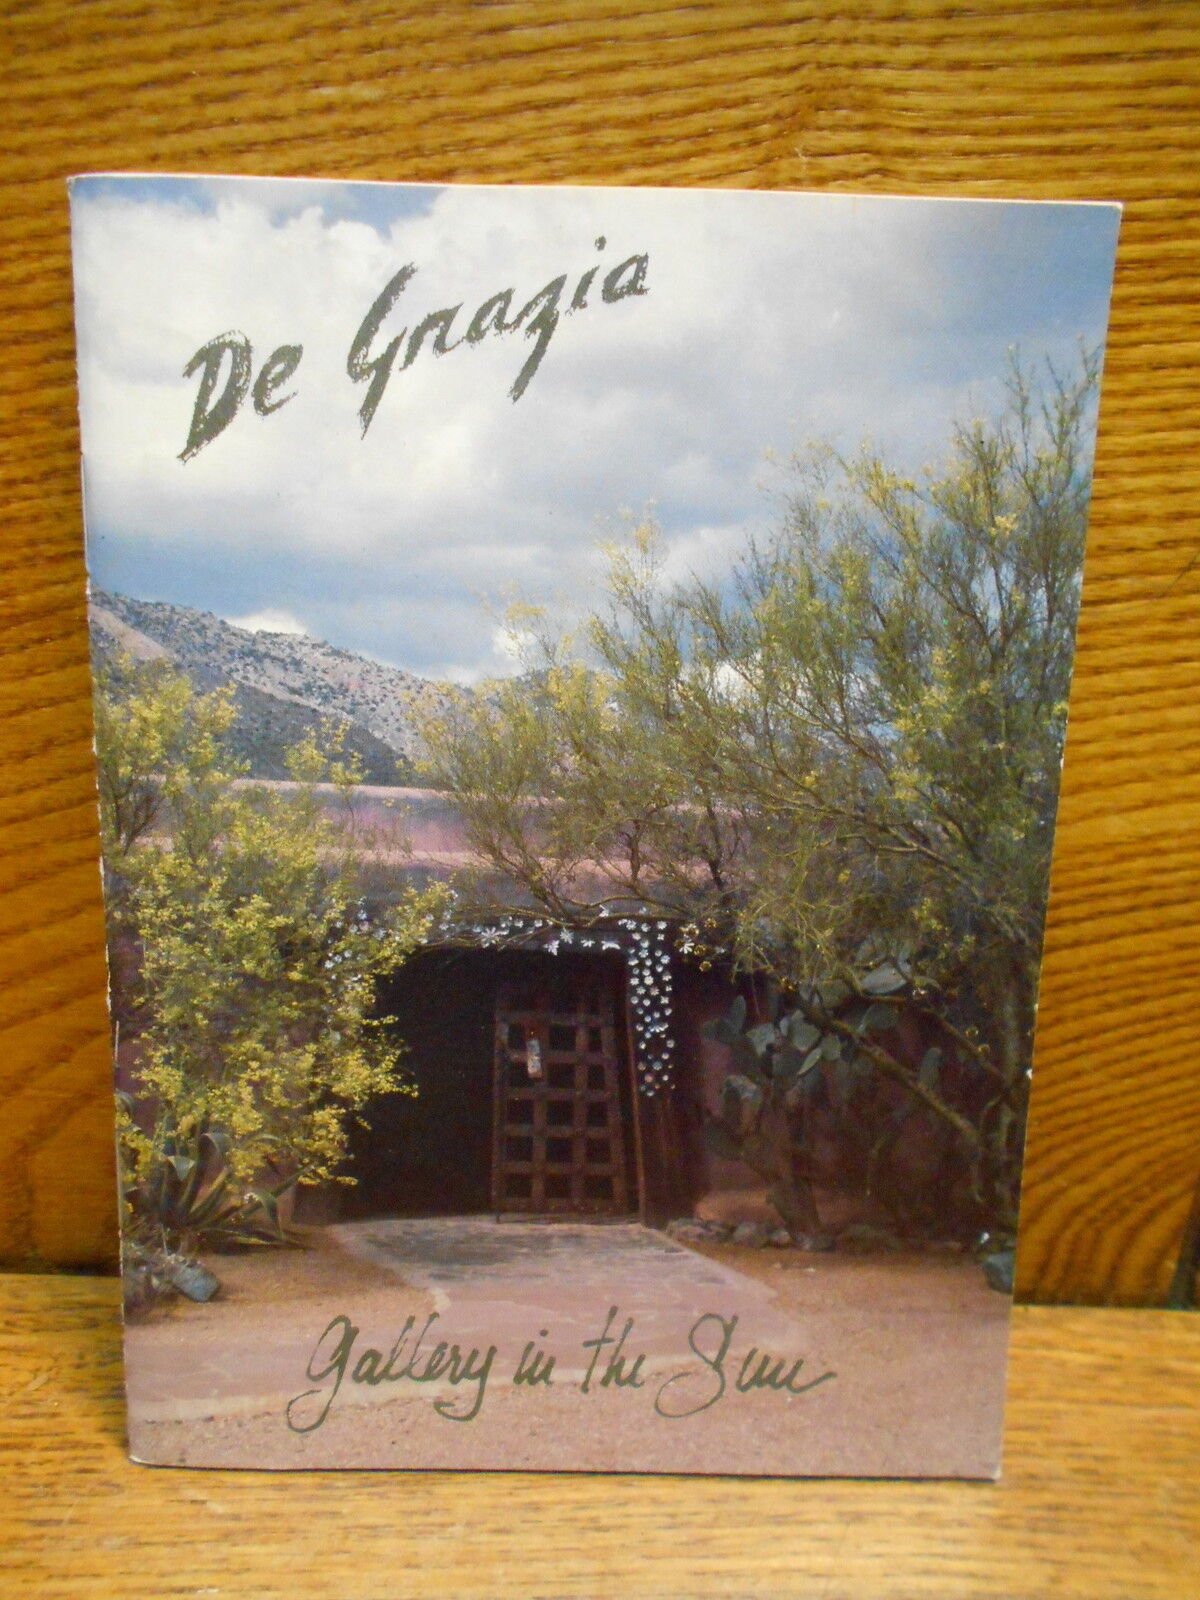 1988 Souvenir Booklet - De Grazia - Gallery In The Sun - Tucson AZ